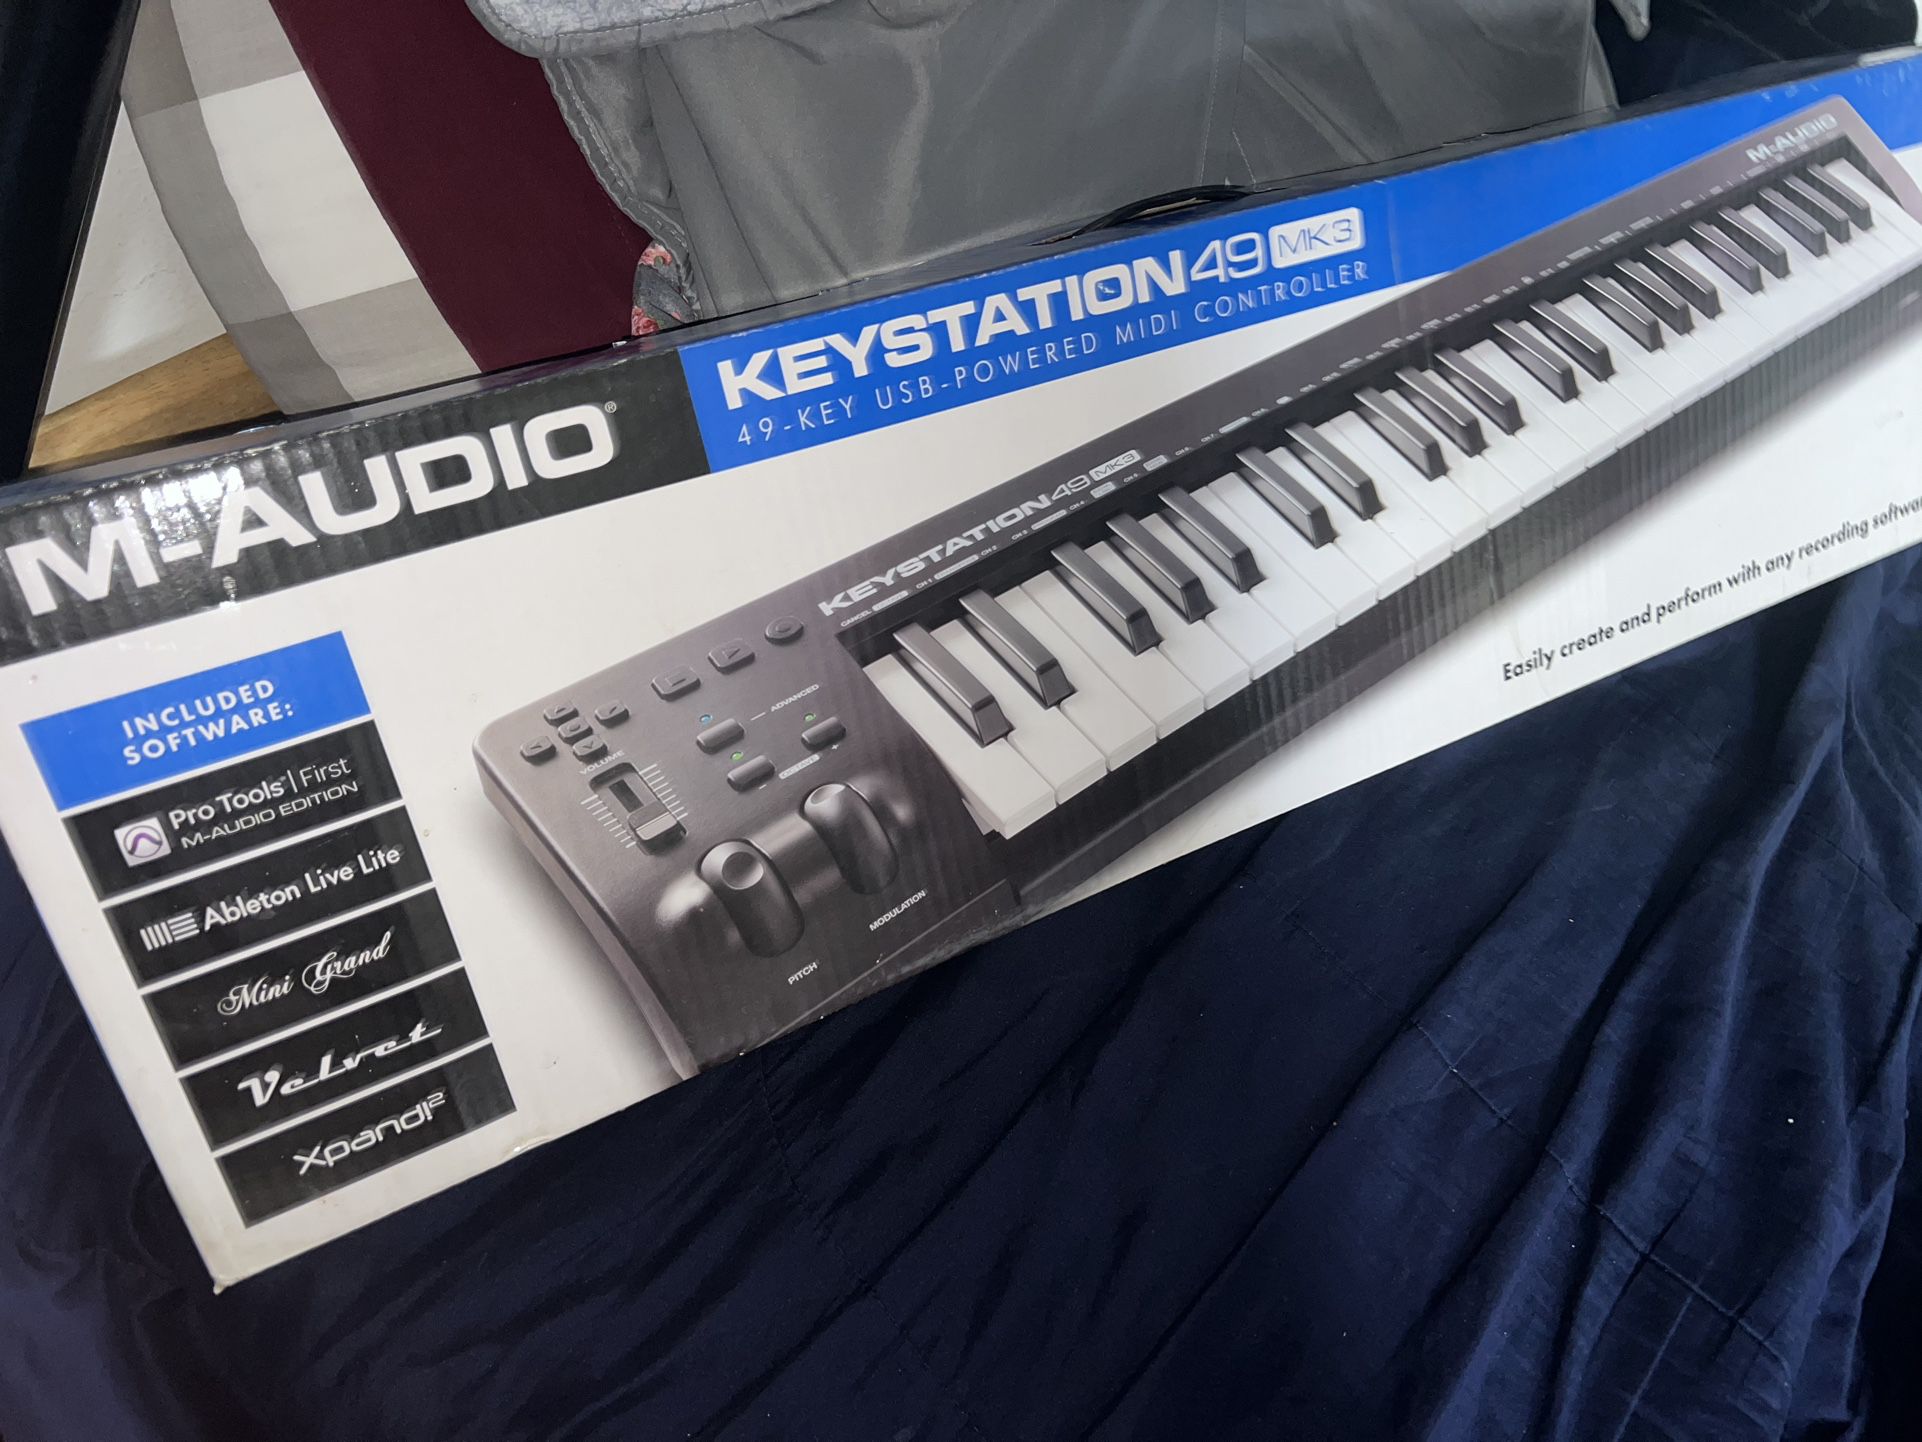 Key station 49 Mk3 MIDI Controller